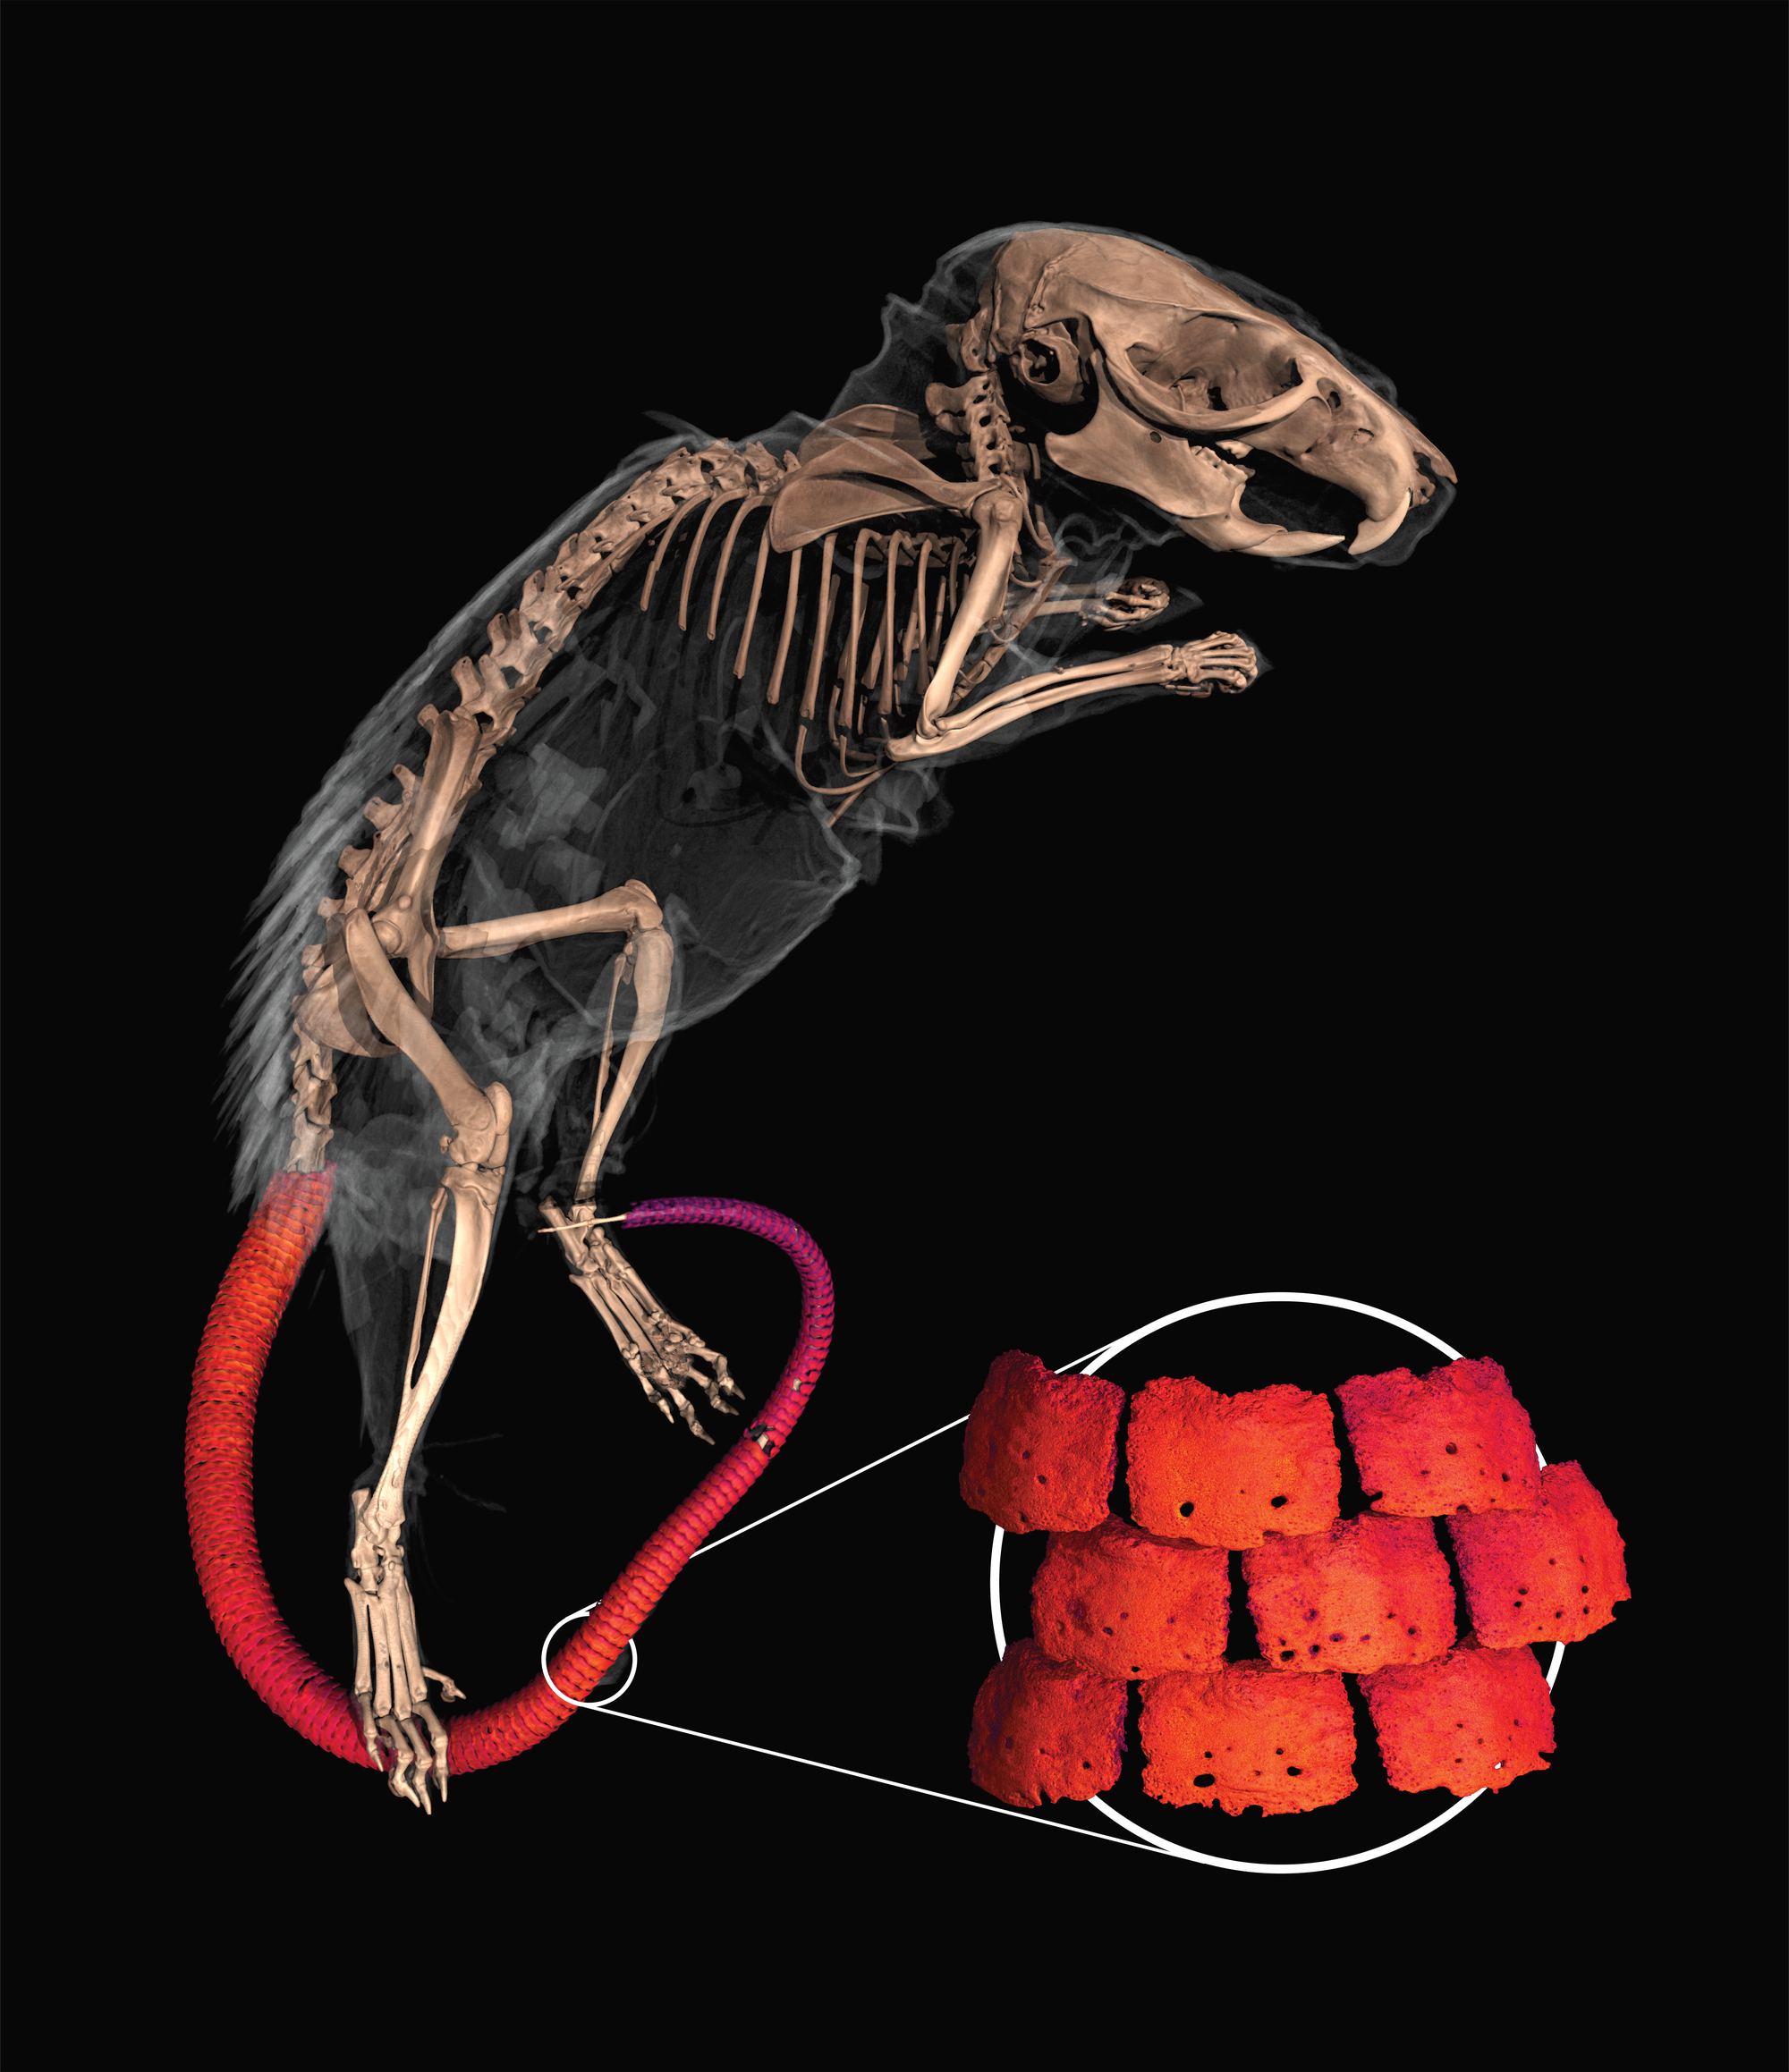 Hautknochenplatten im Mäuseschwanz im Röntgenbild